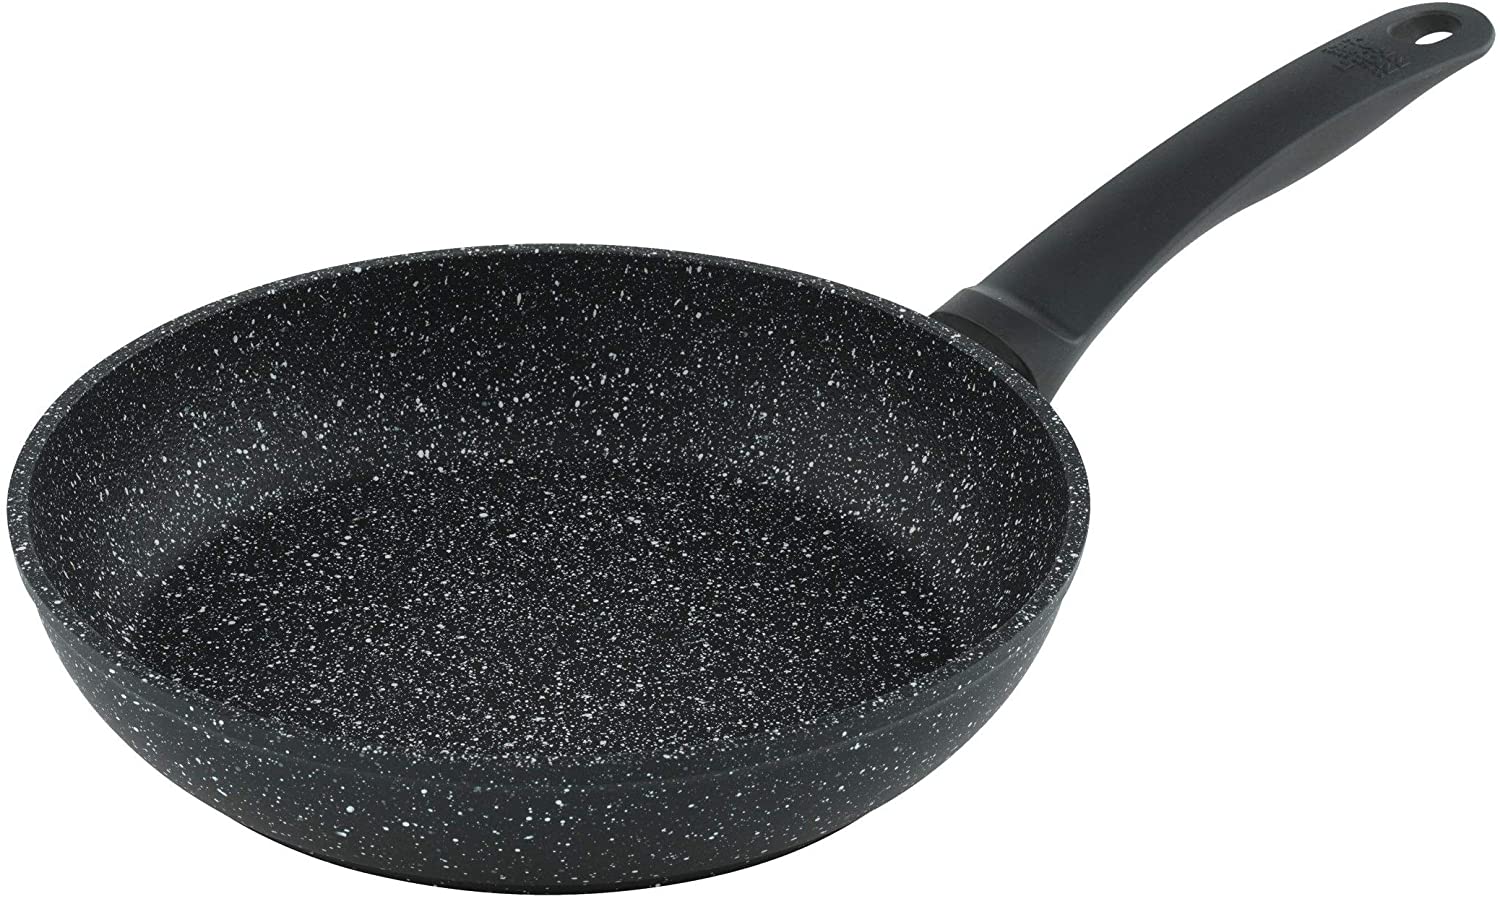 Kuhn Rikon Easy Induction Marble Frying Pan Frying Pan Induction Pan Diameter 28 cm, 31559